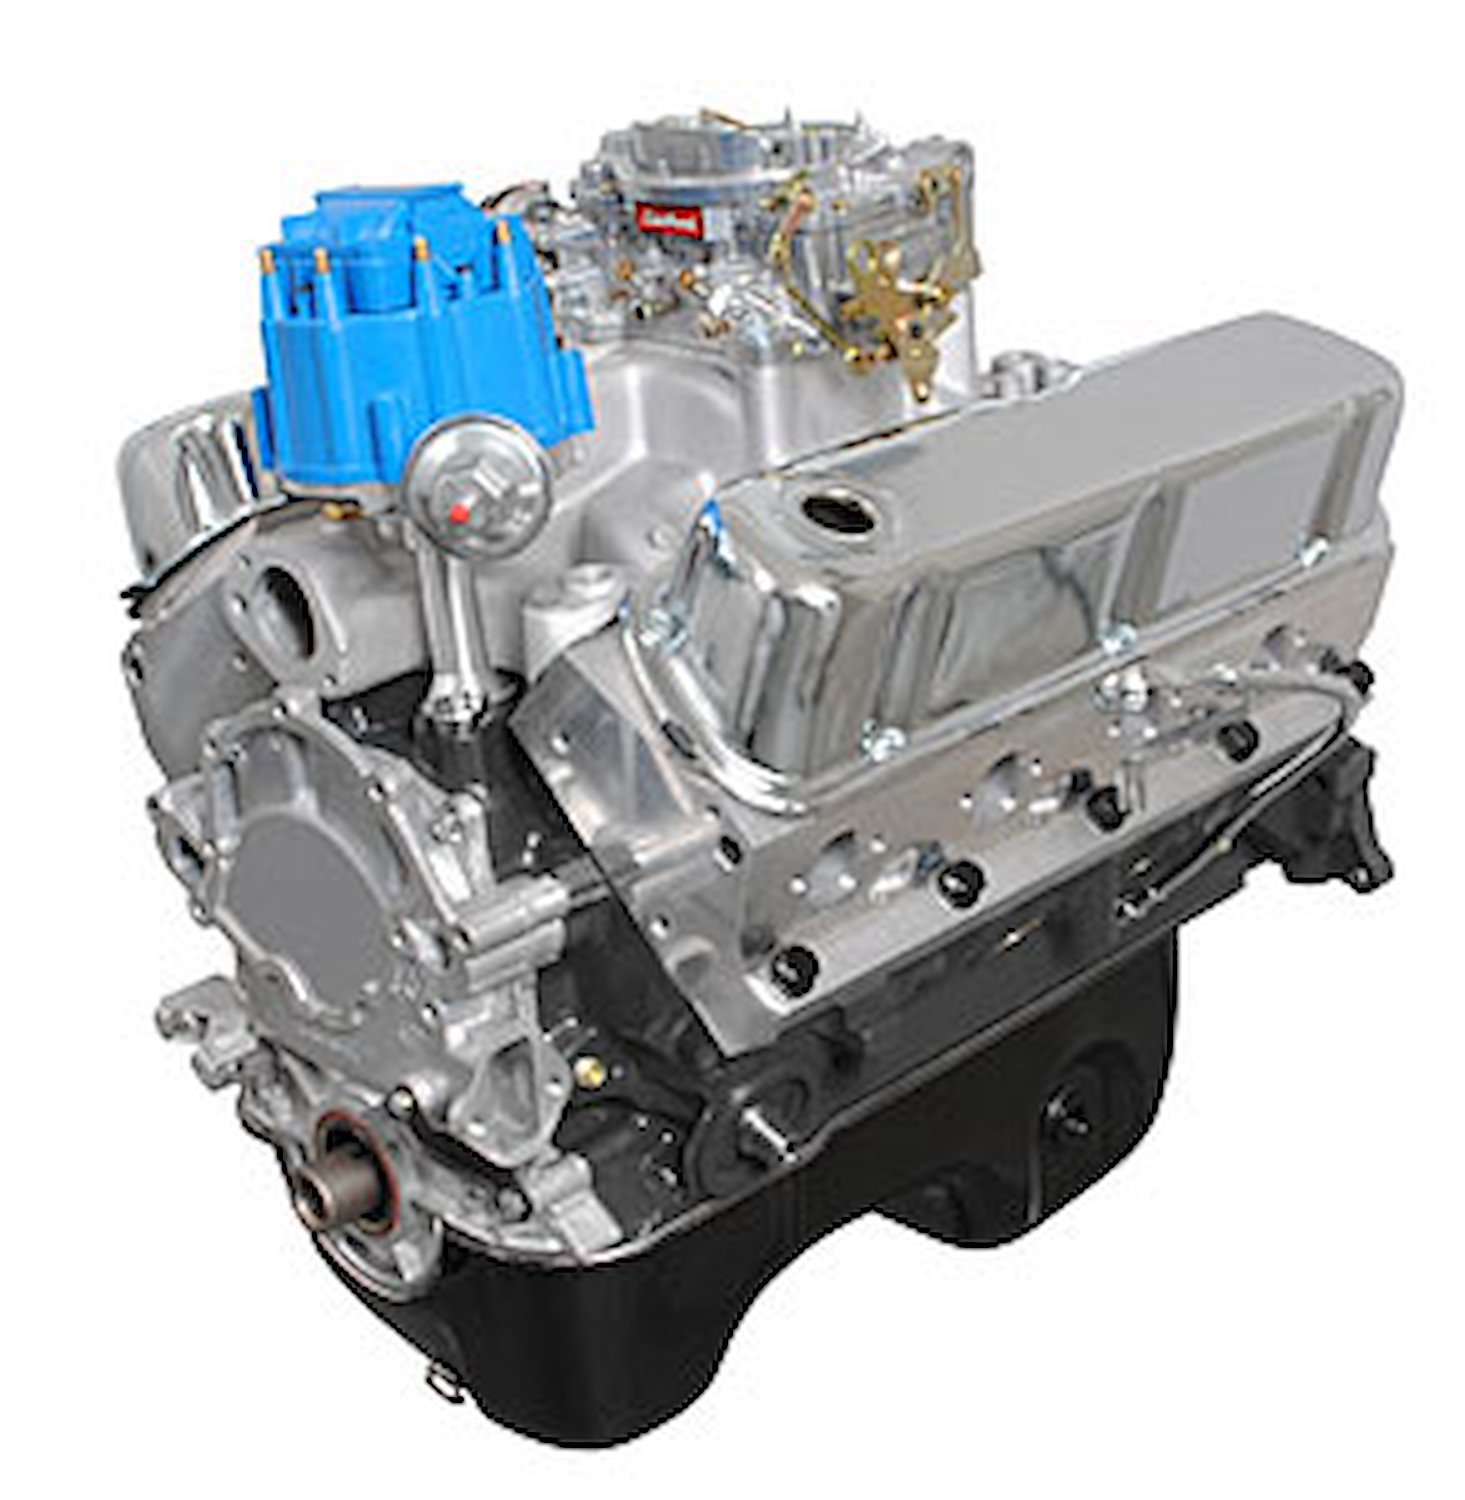 Blueprint ford engine reviews #2